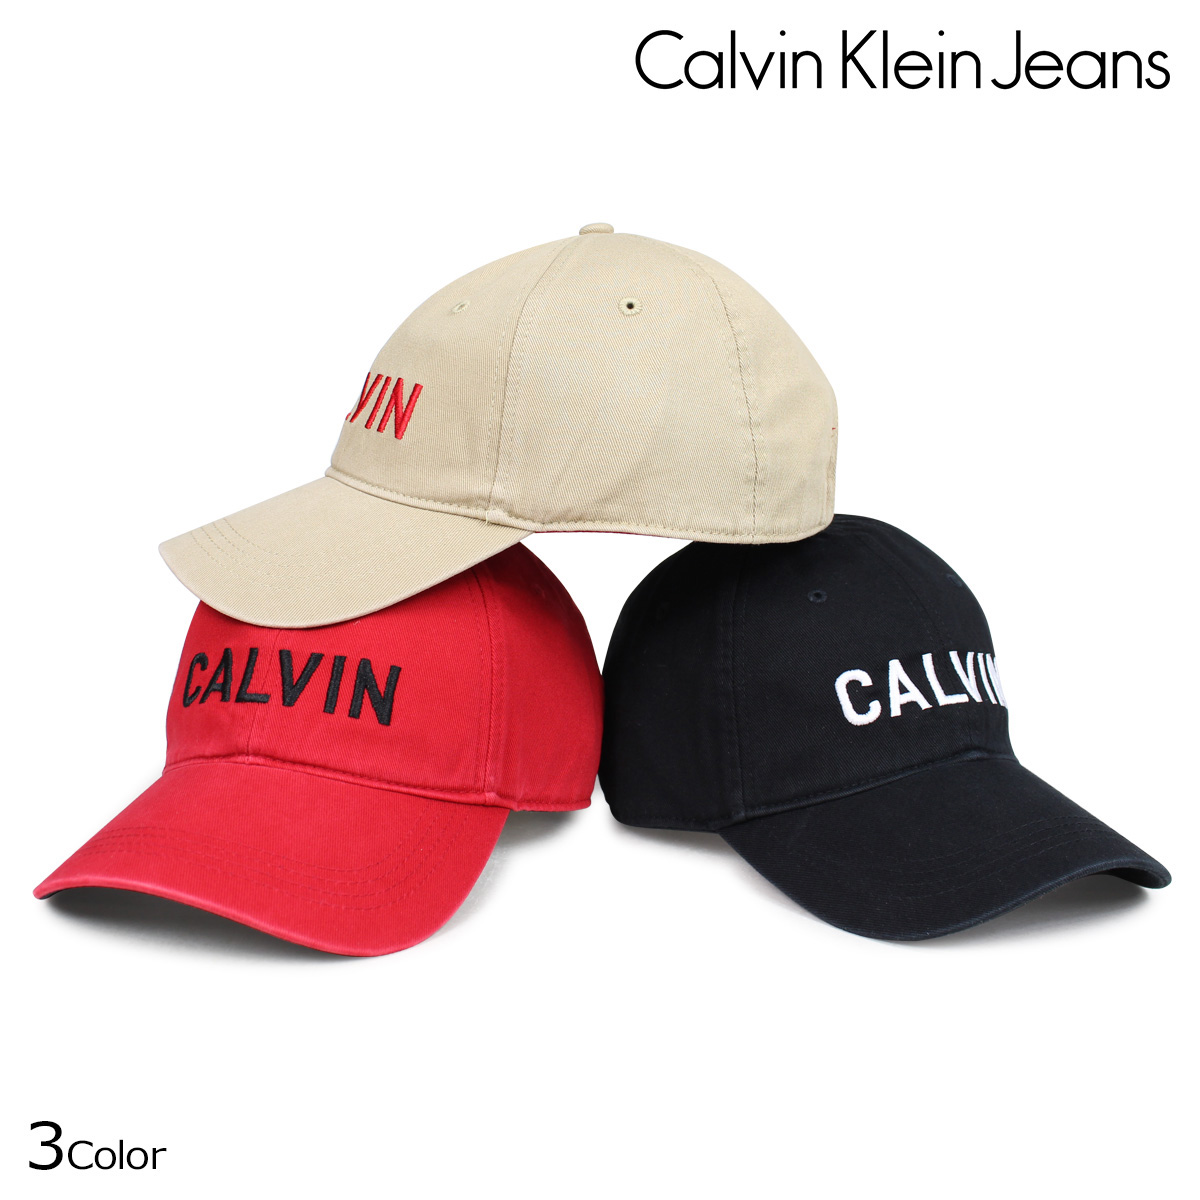 calvin klein jeans outlet online